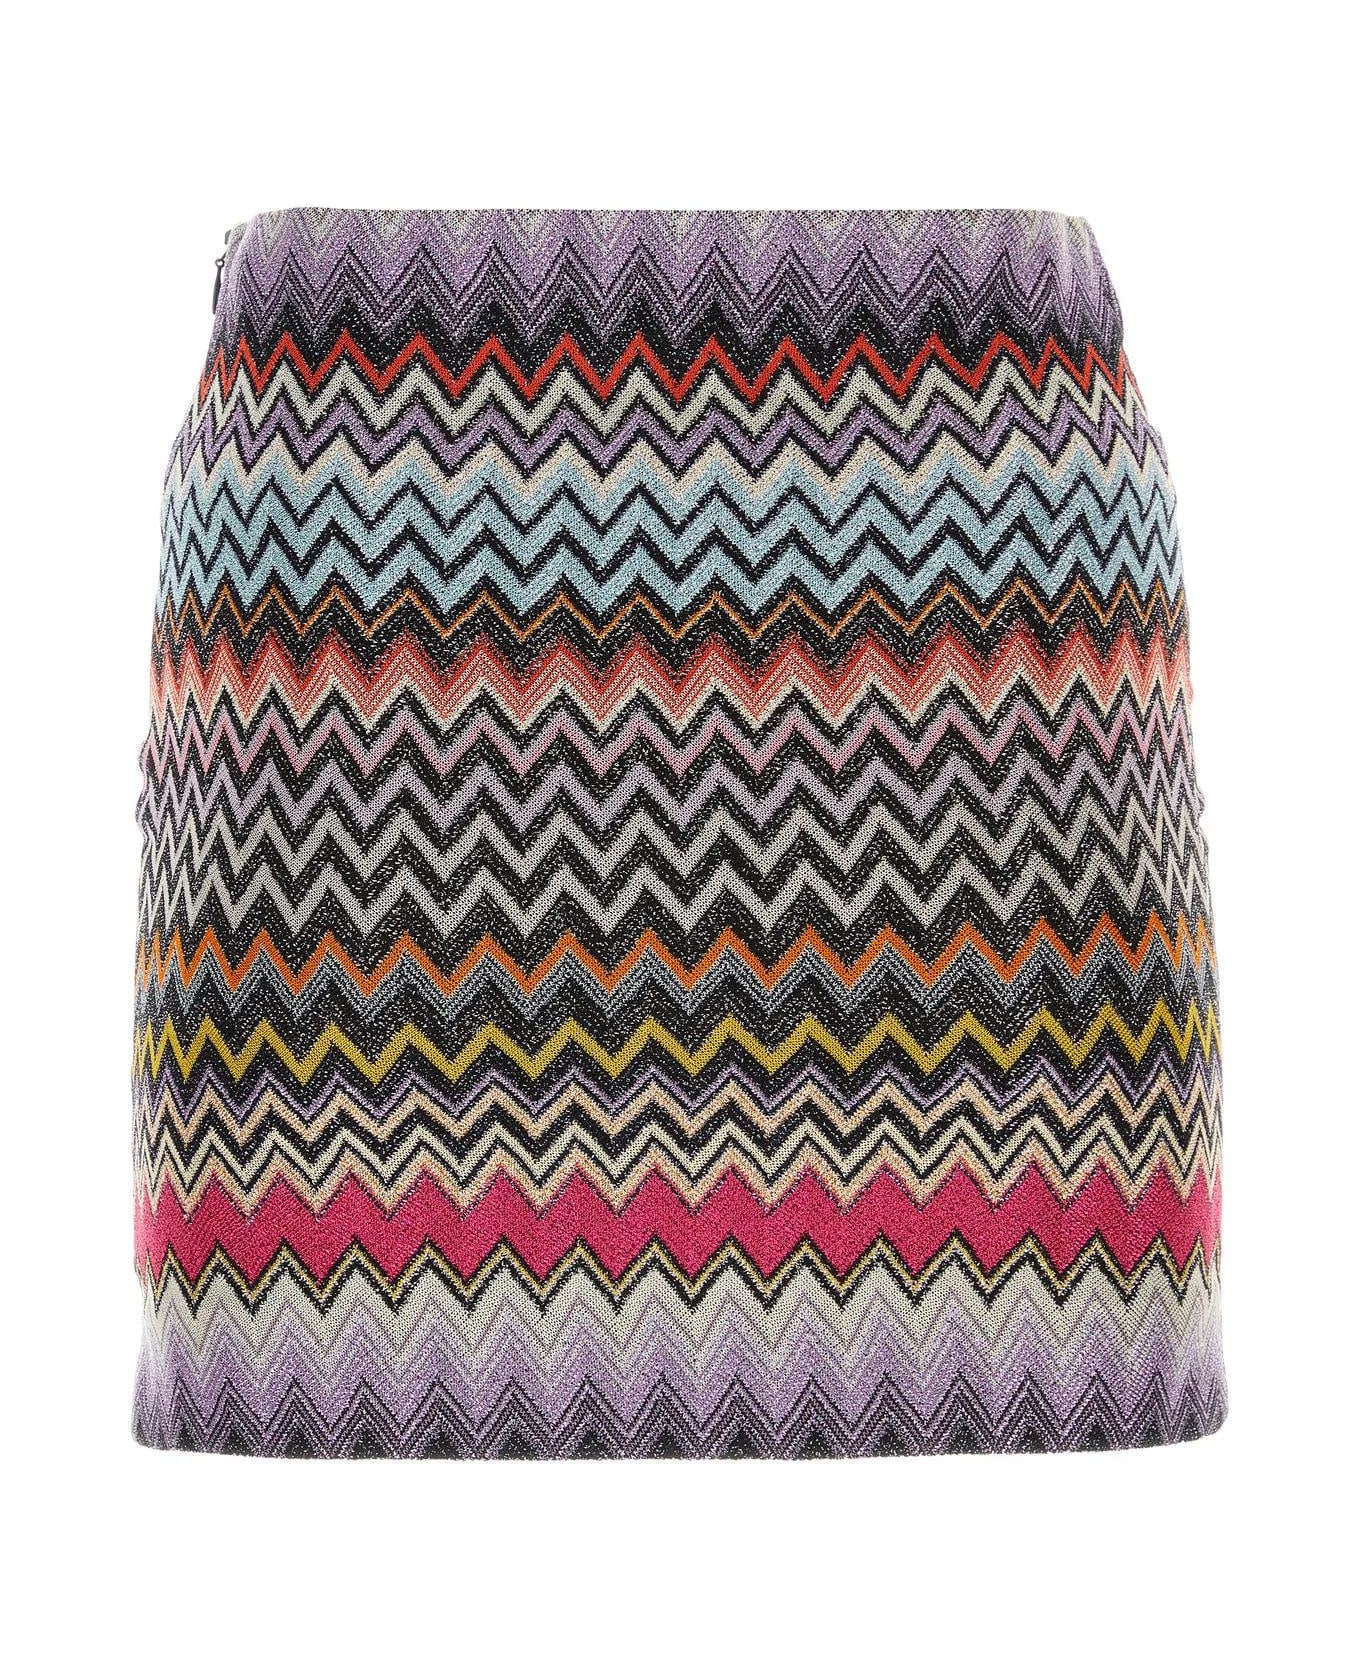 Missoni Embroidered Viscose Blend Mini Skirt - Multicolour/nero スカート